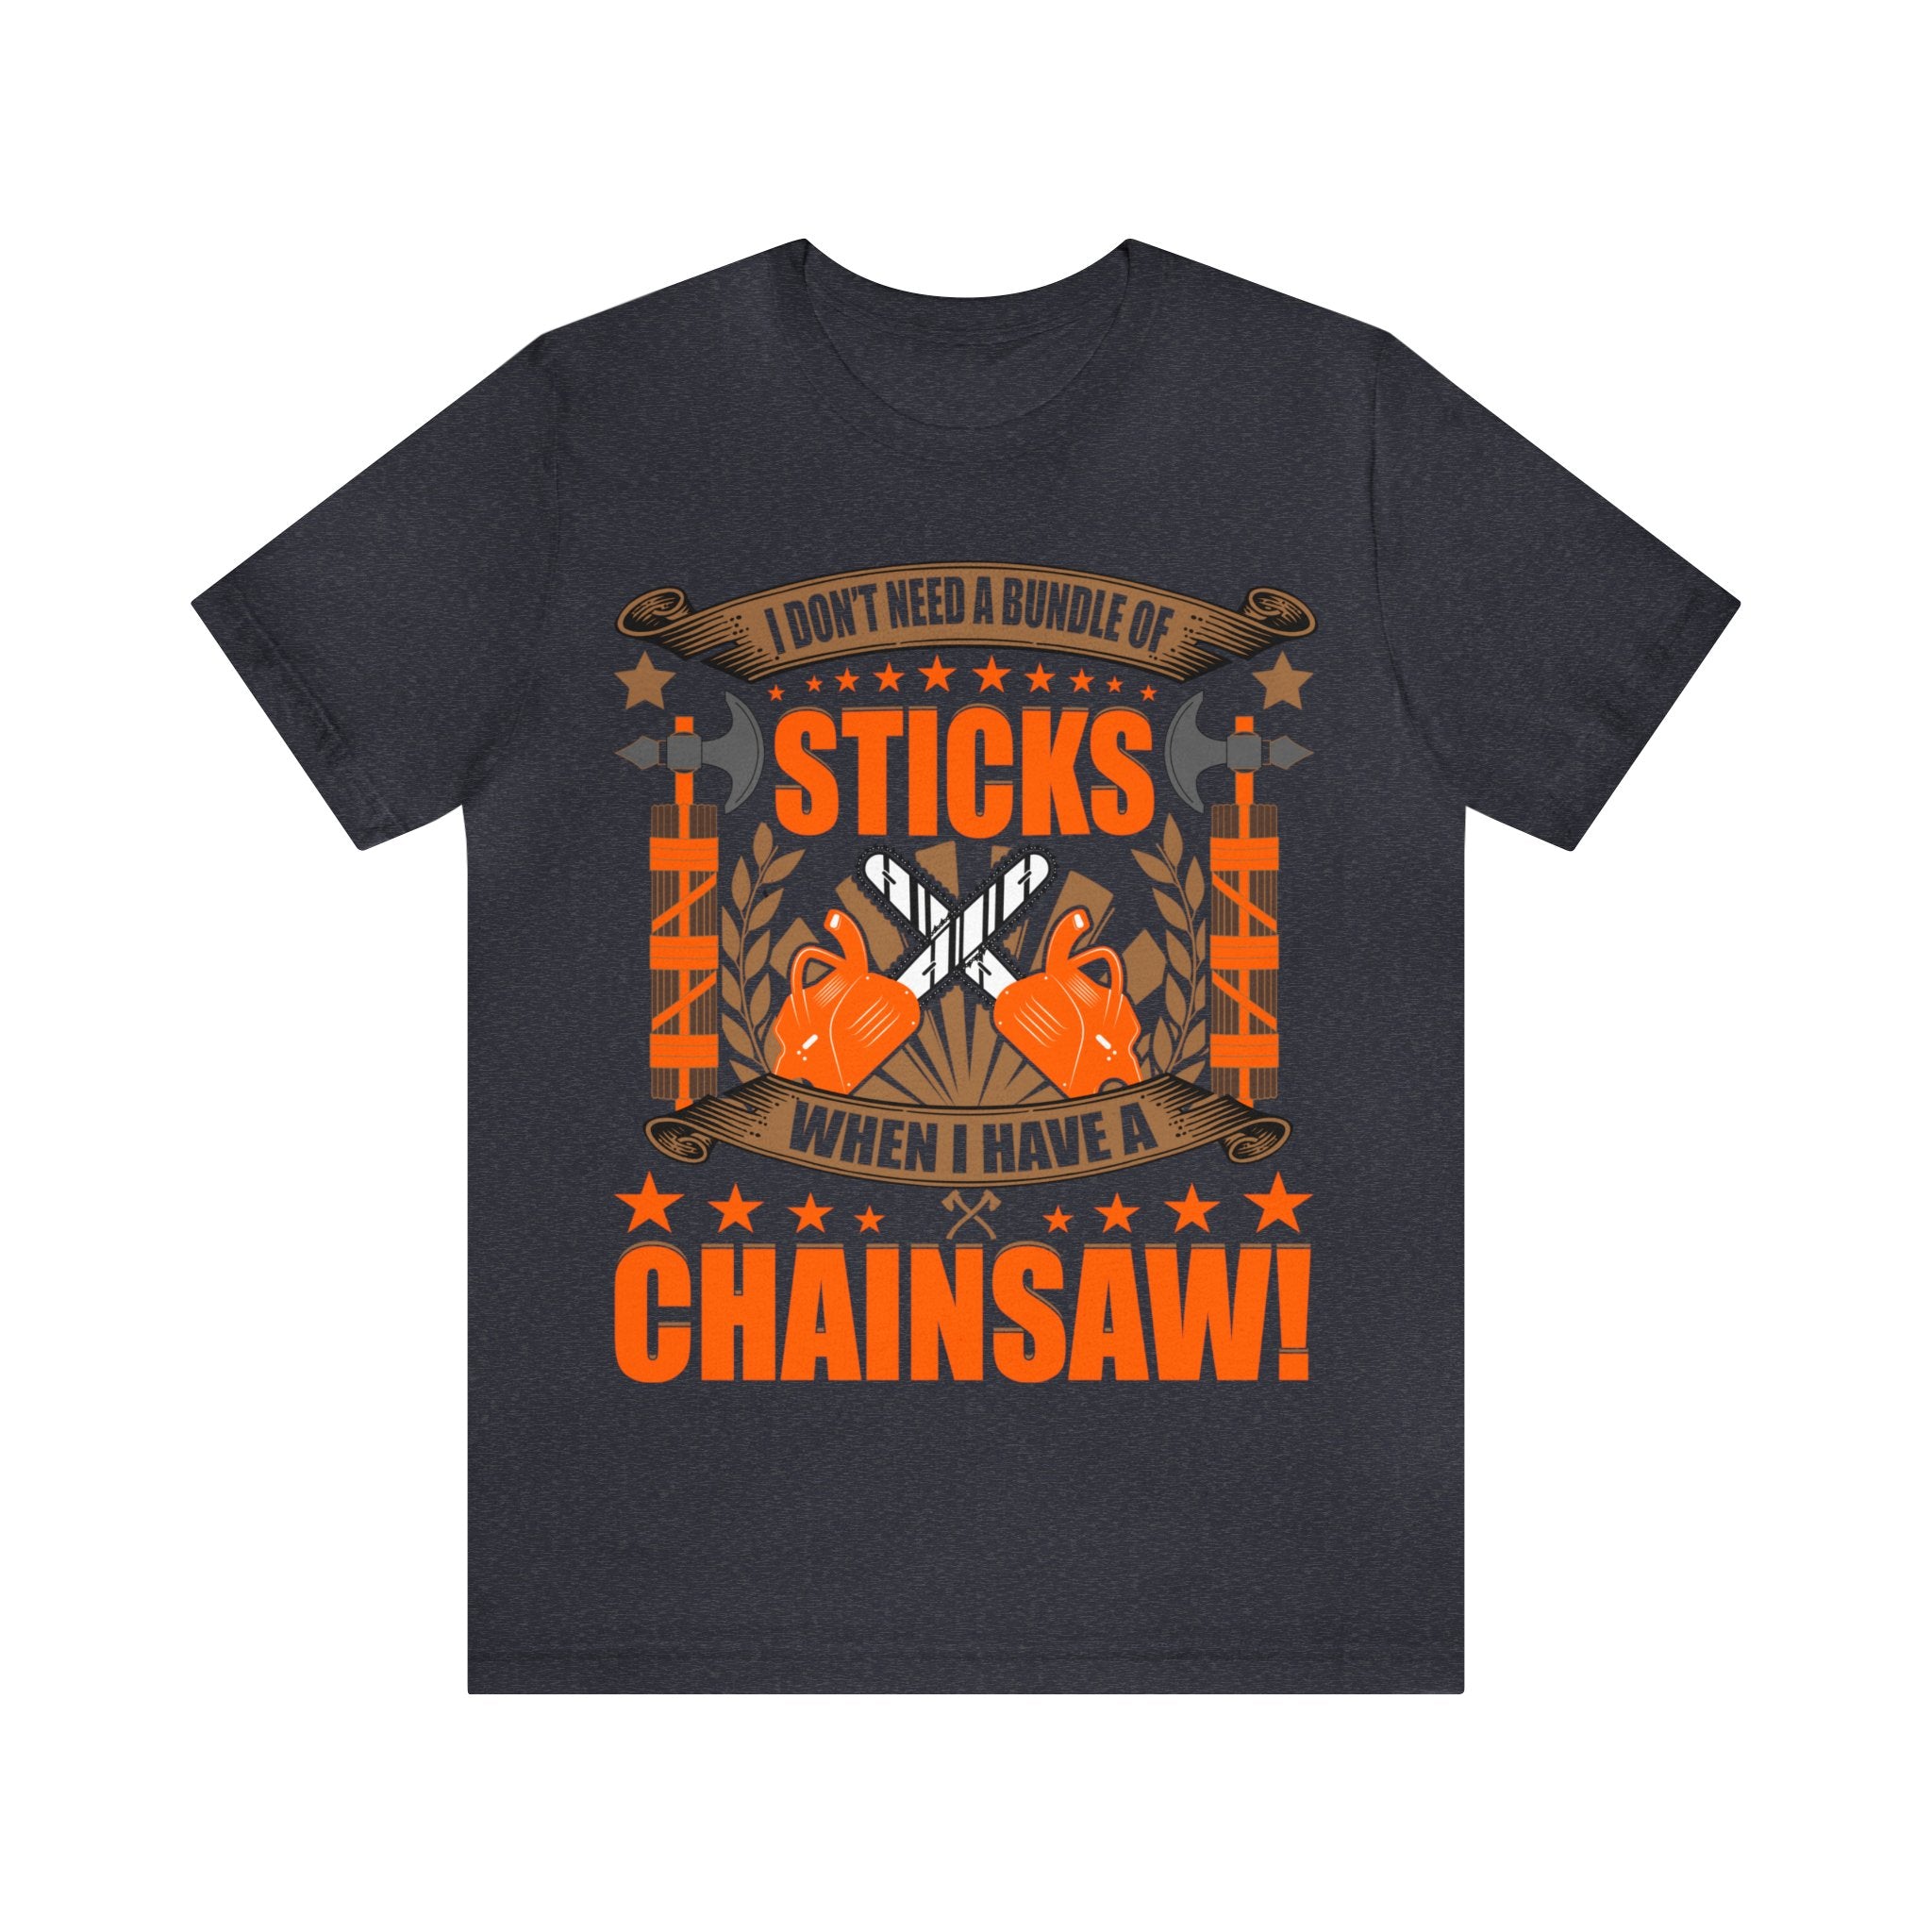 Chainsaws over Sticks